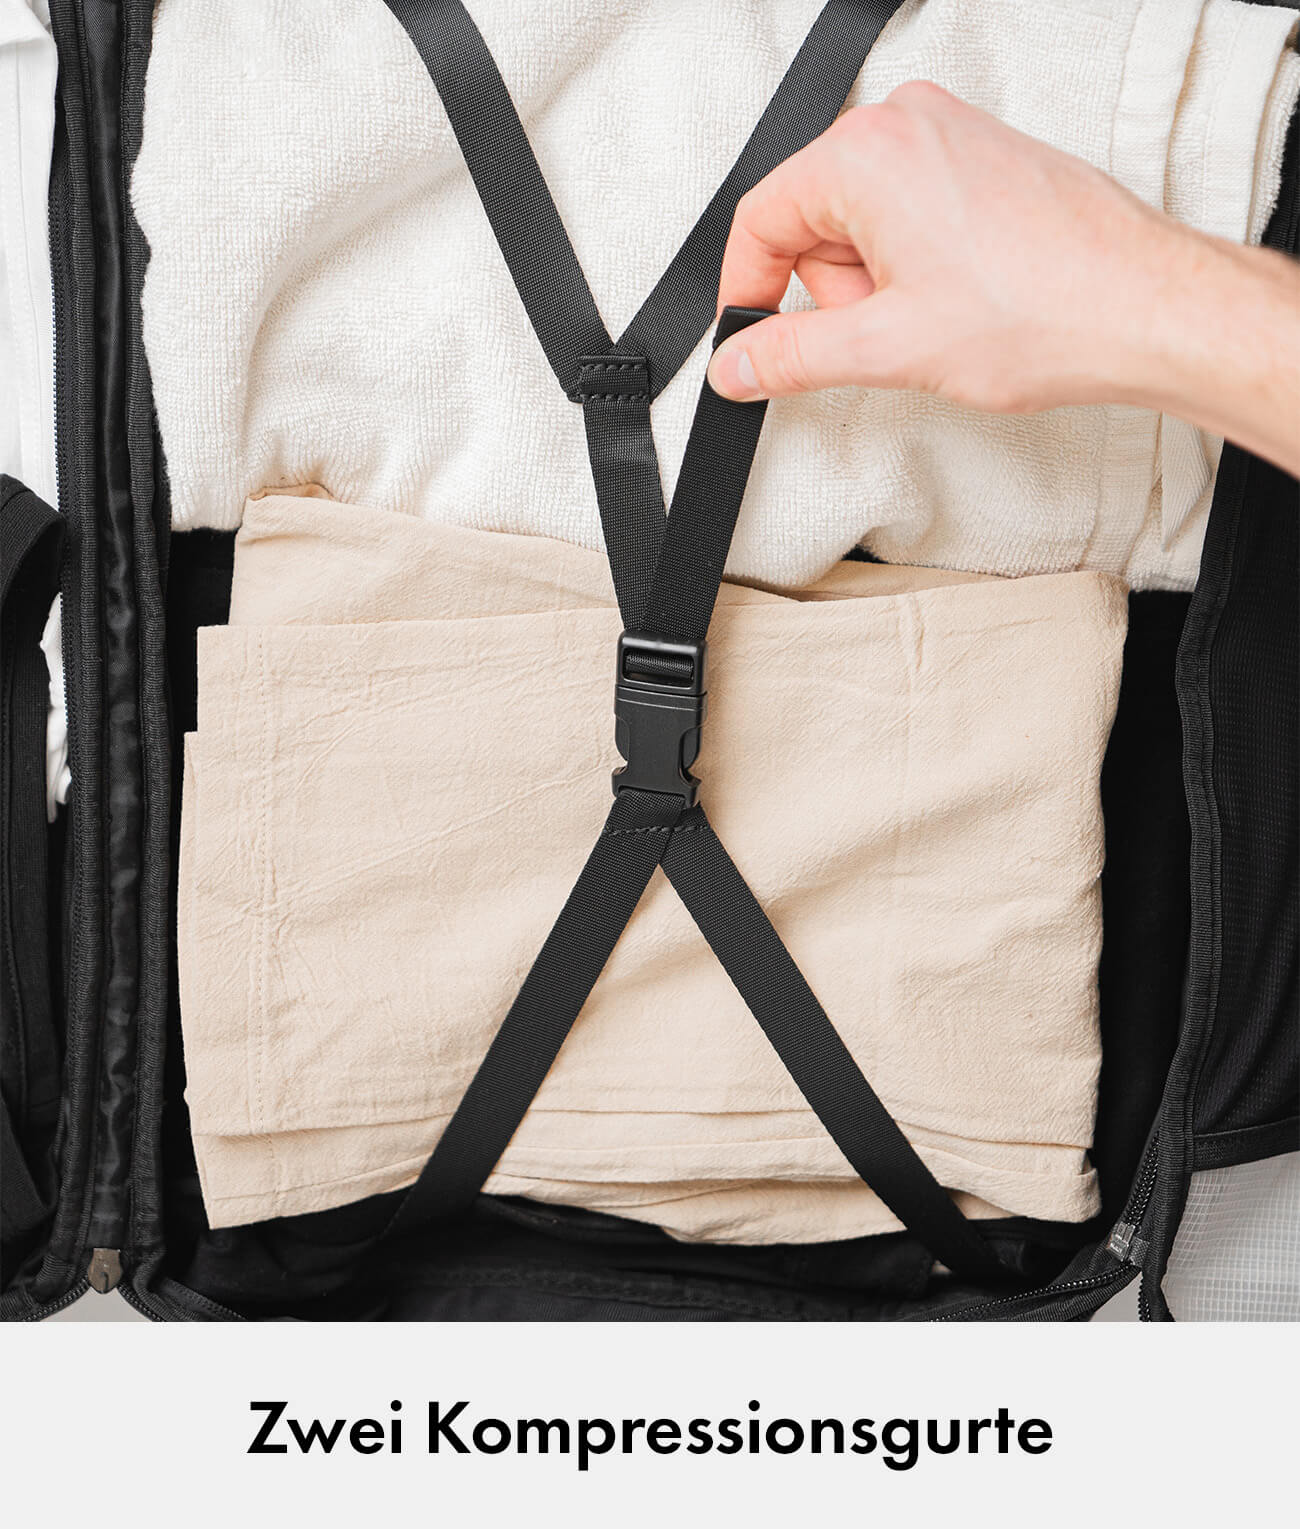 Travel Backpack Pro + Tech Organizer